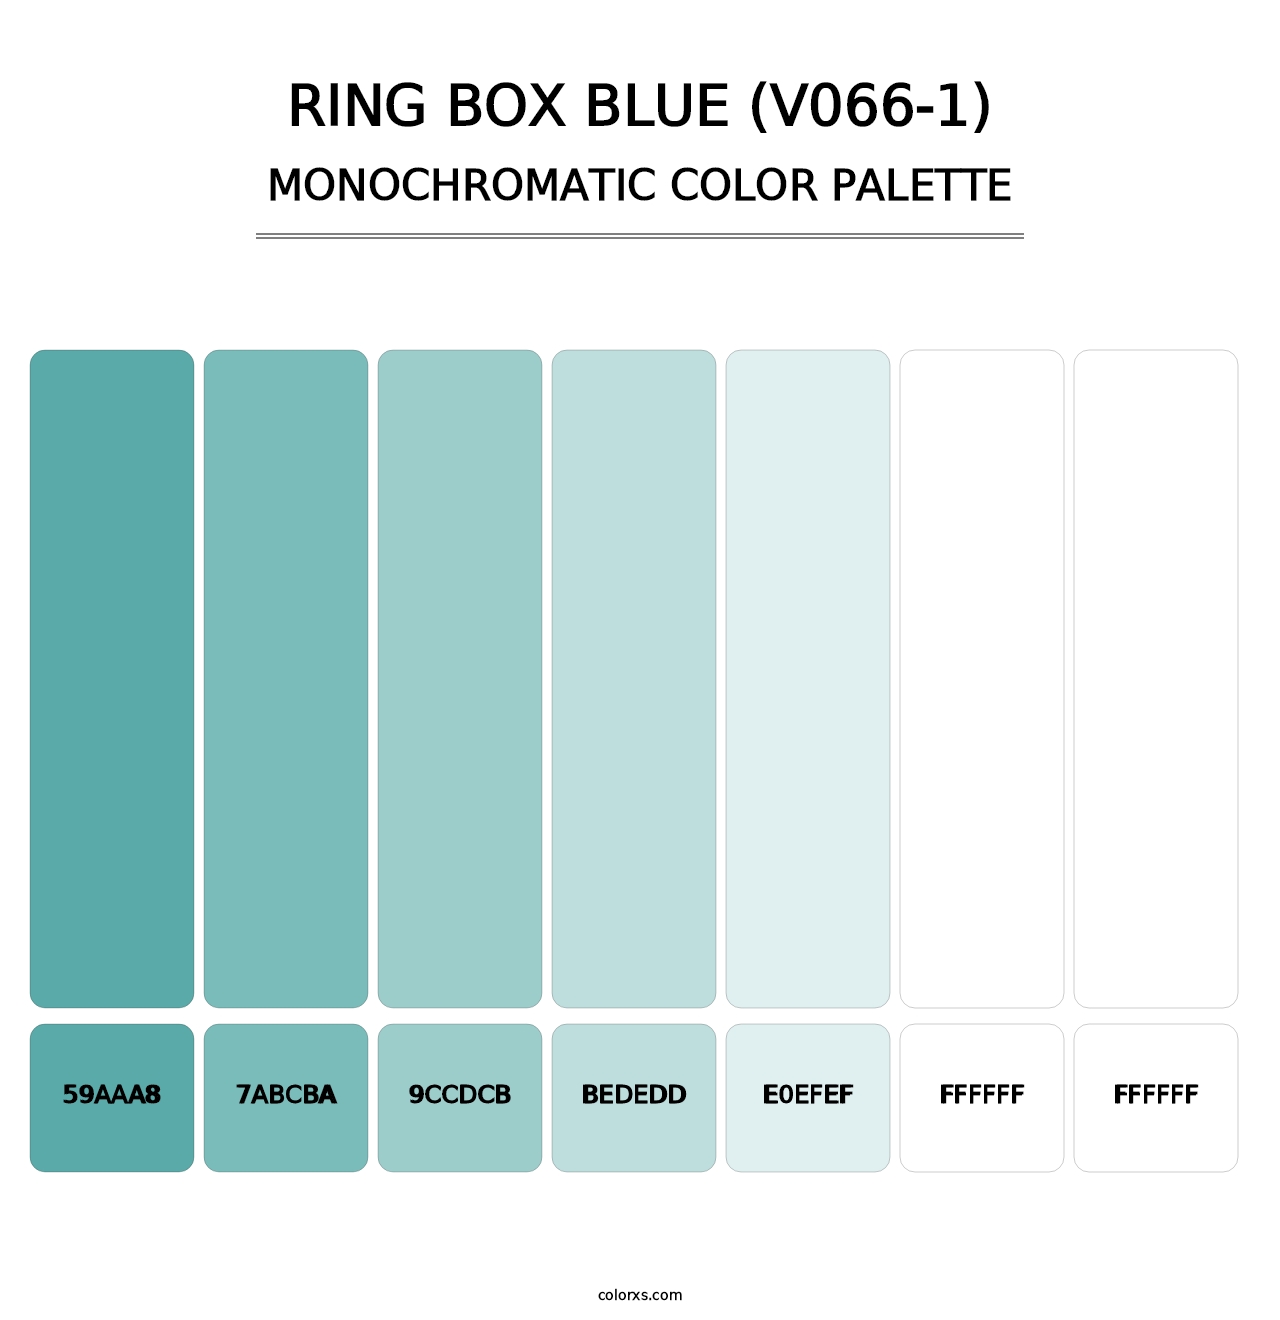 Ring Box Blue (V066-1) - Monochromatic Color Palette